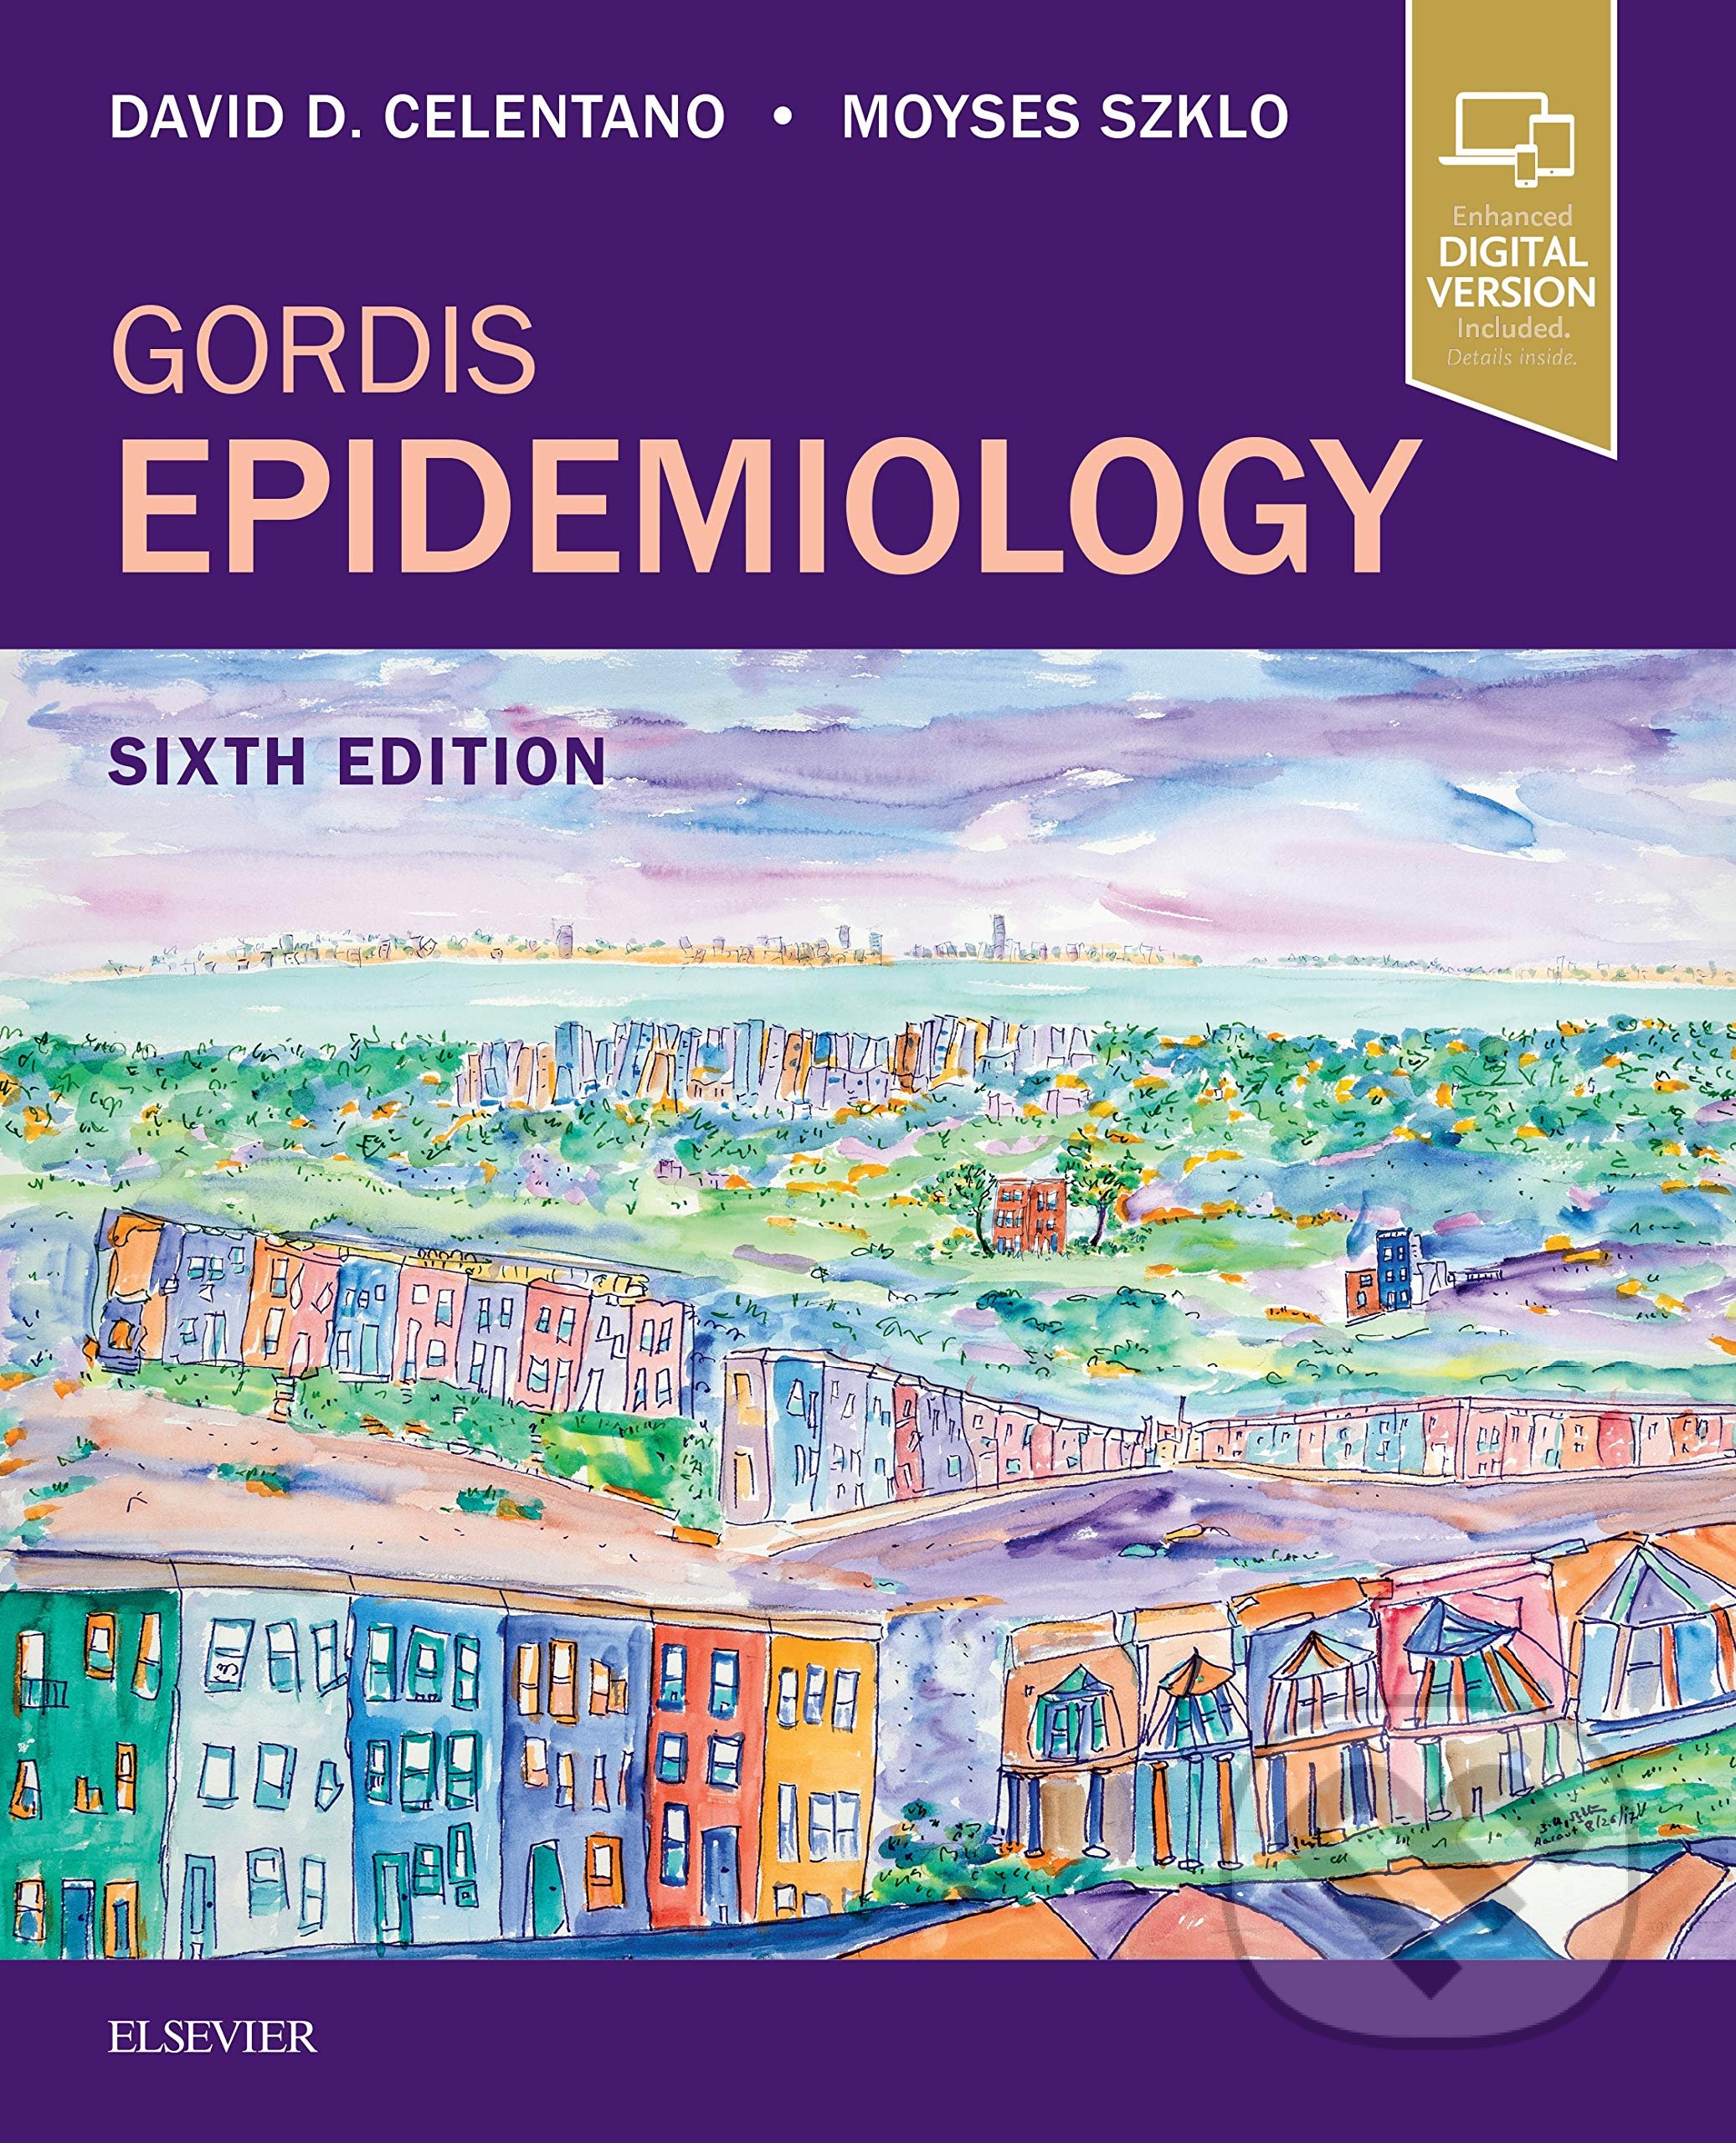 Gordis Epidemiology - David D Celentano, Moyses Szklo, Elsevier Science, 2019